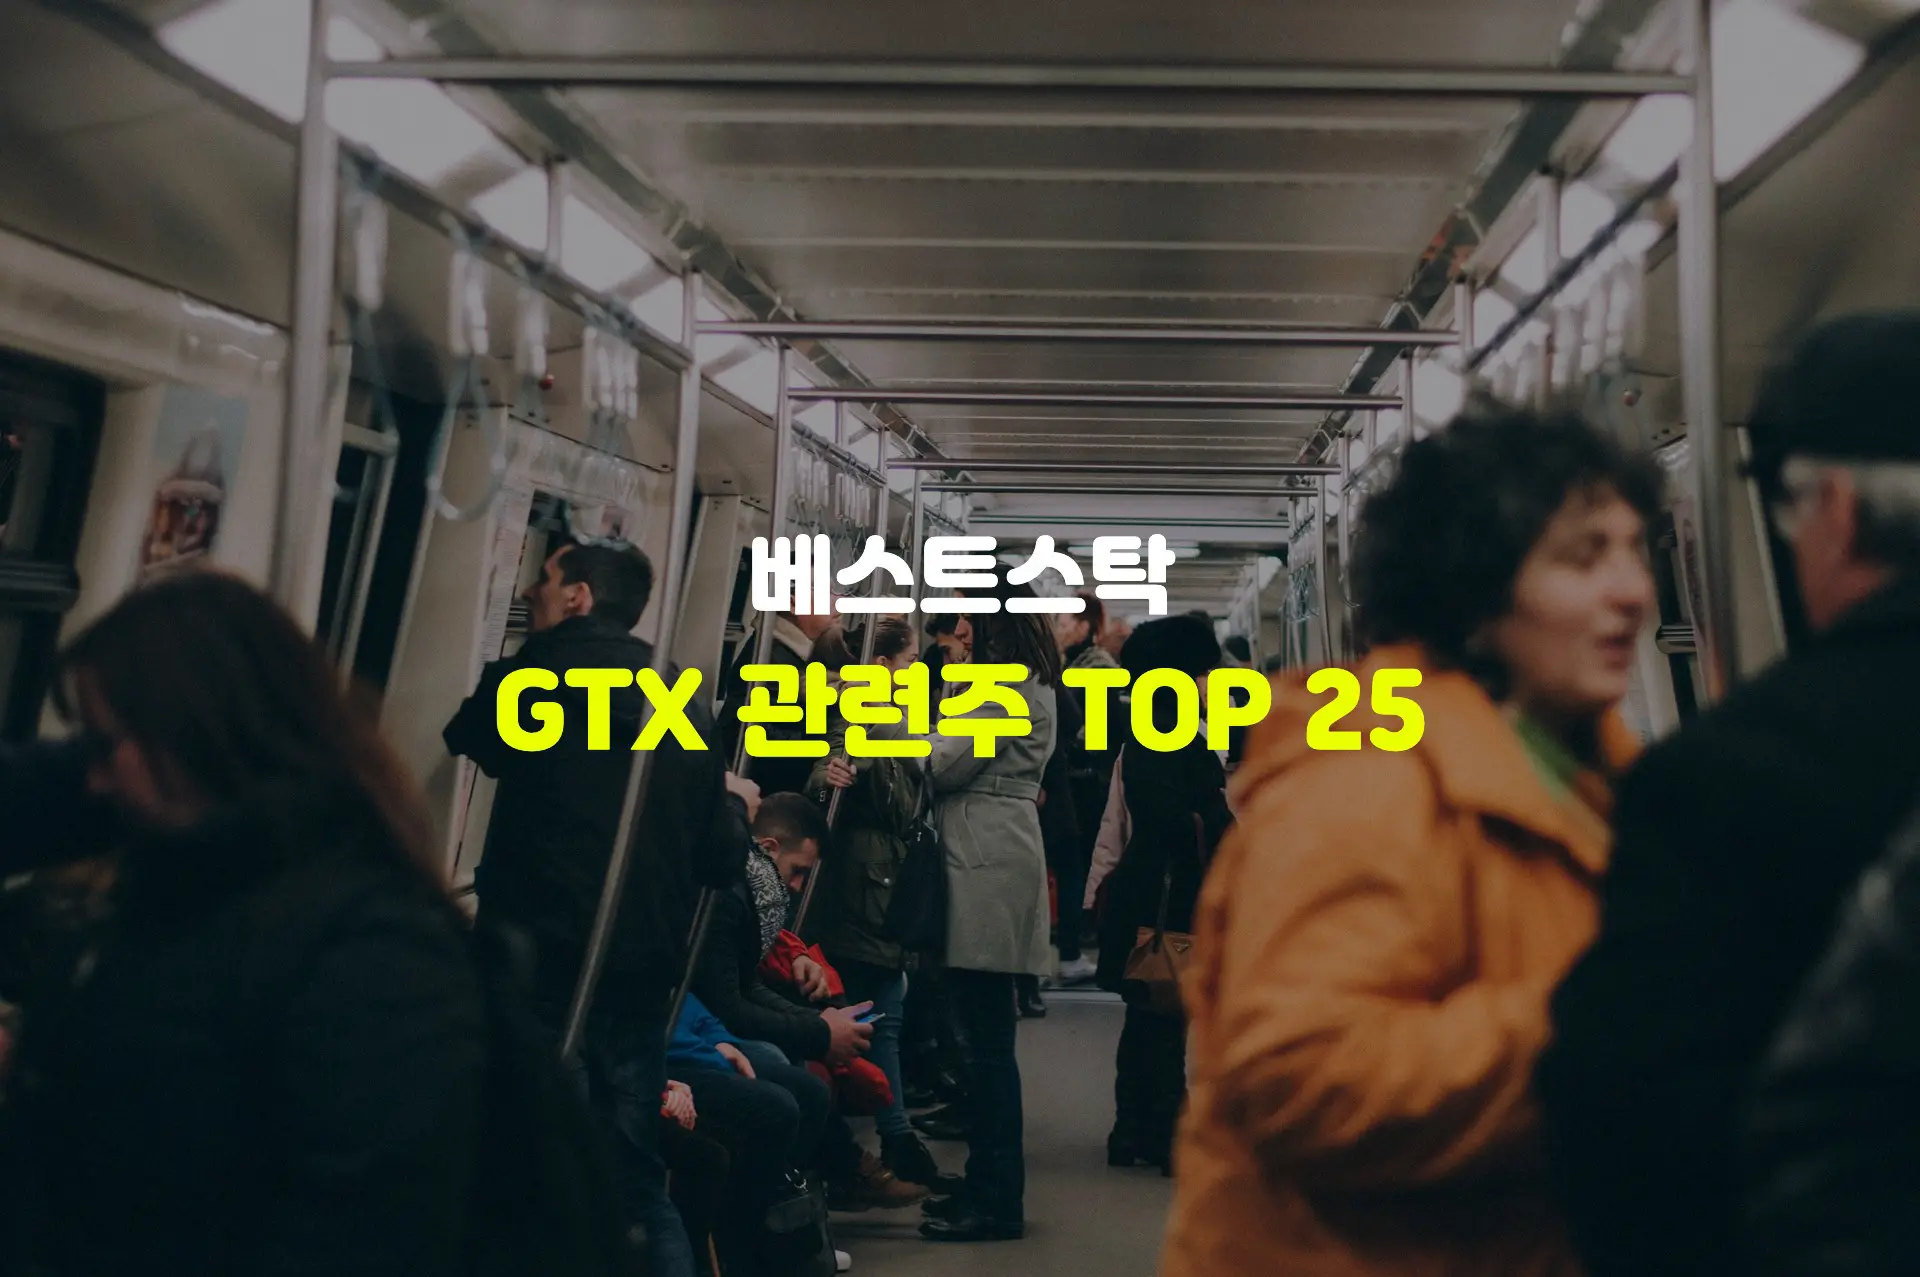 GTX 관련주 TOP 25 썸네일